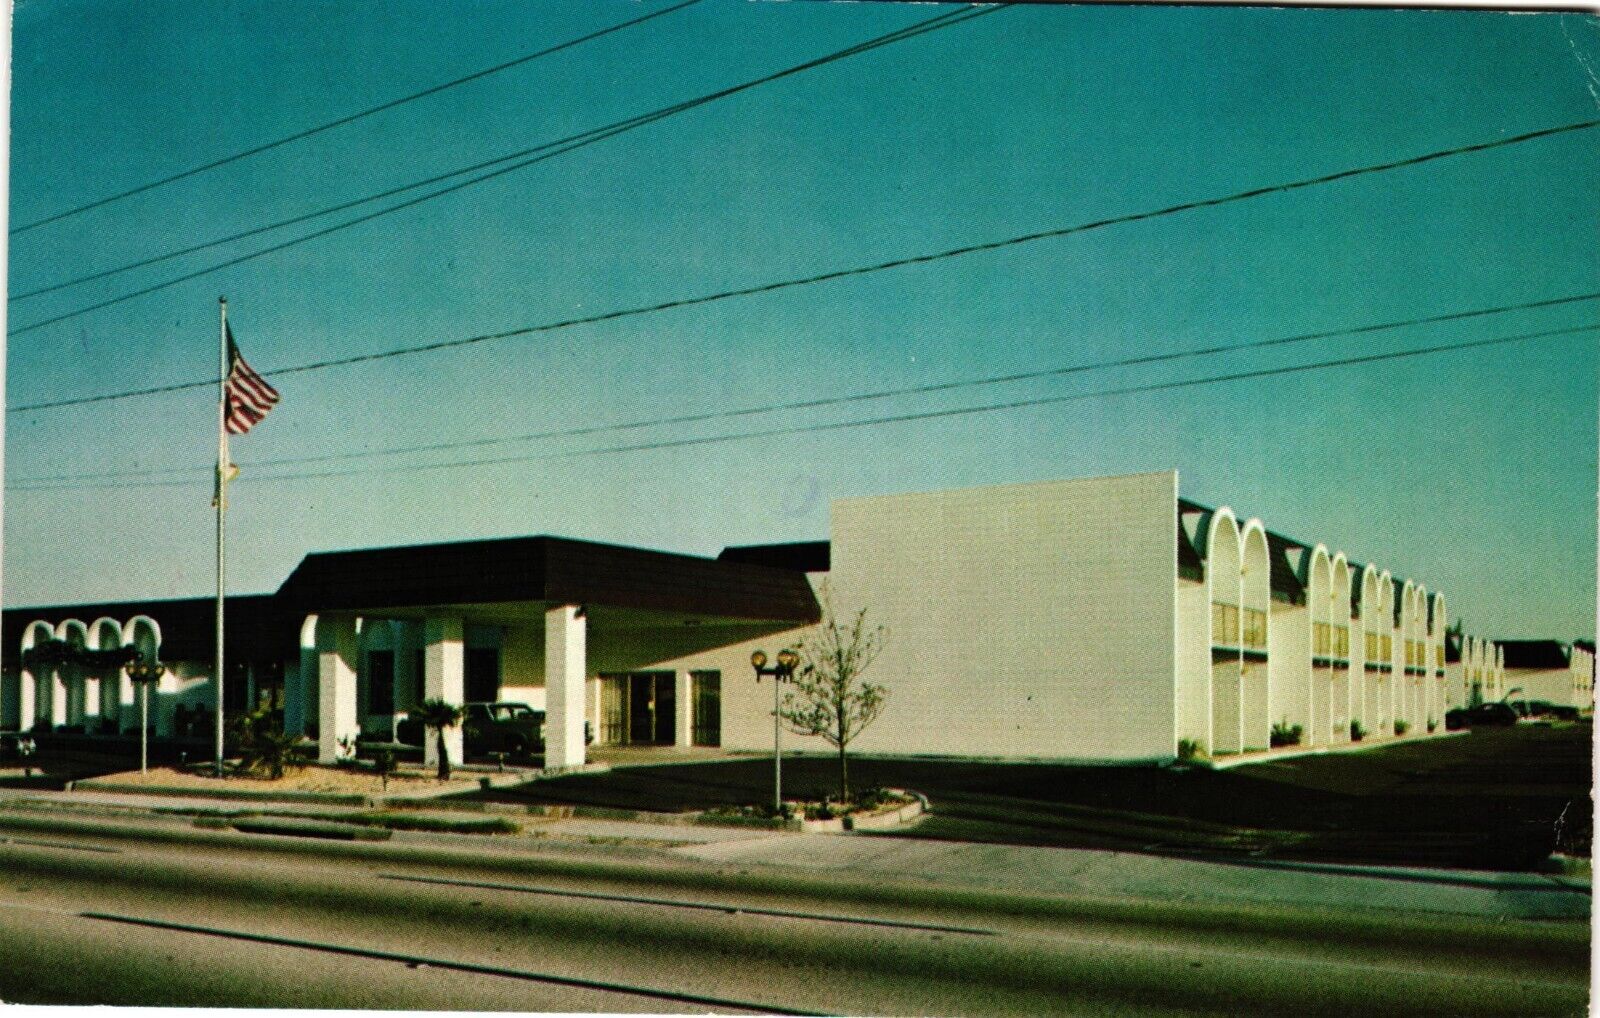 1970 Royal Inn Of Tampa Florida FL Posted Exterior View Vintage Postcard